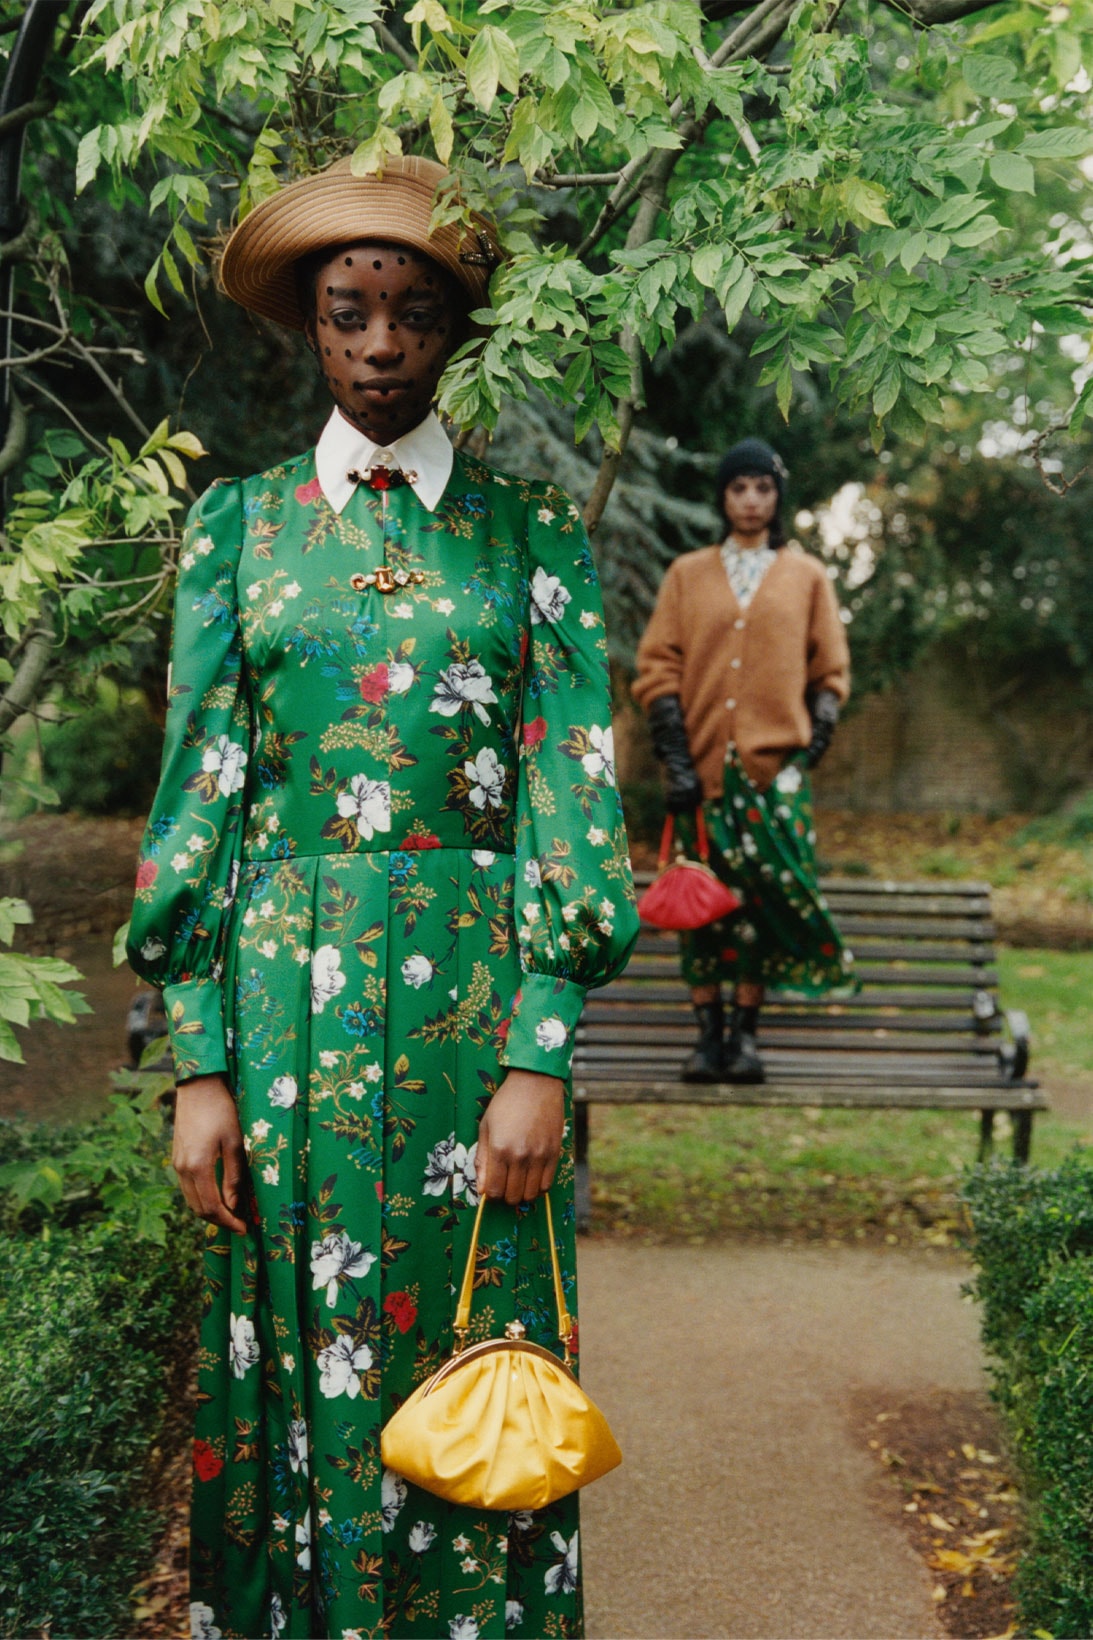 erdem moralioglu pre-fall 2021 collection lookbook nancy mitford floral green dress